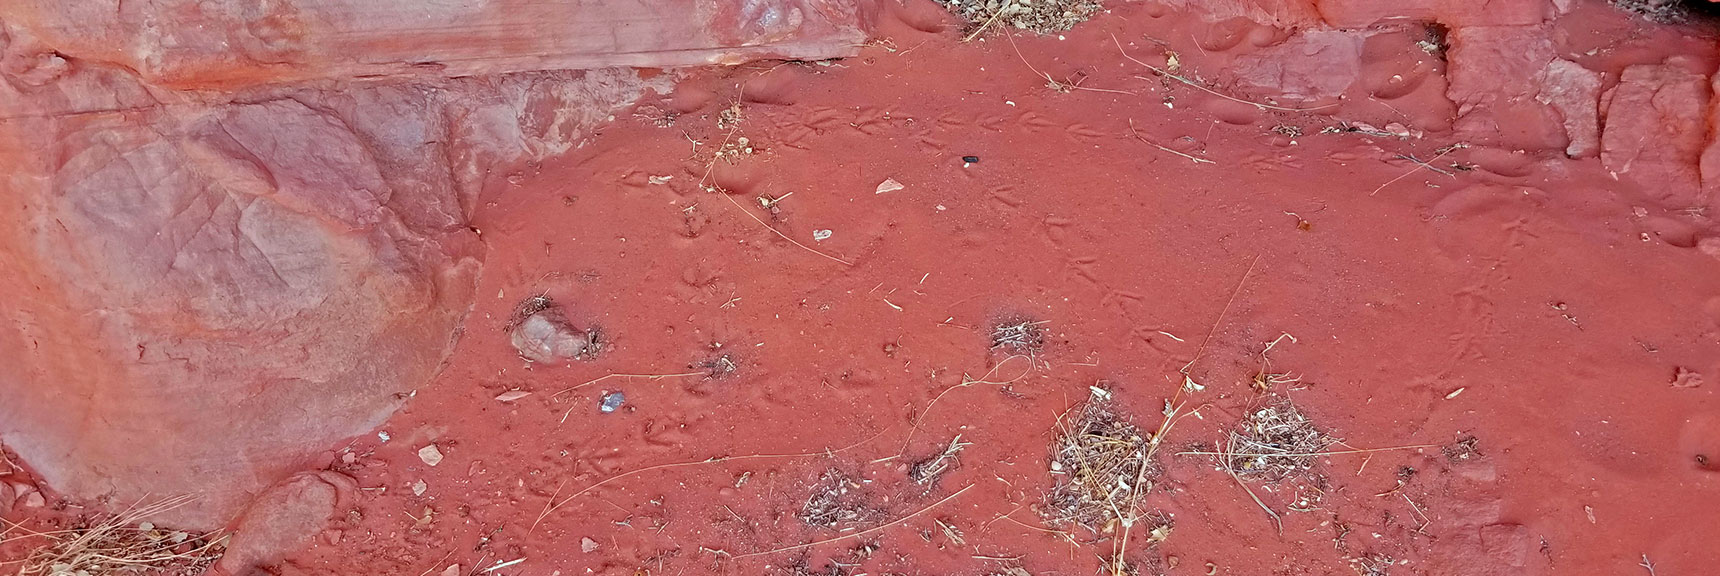 Footprints of Small Animal Near Burrow Opening | Little Red Rock Las Vegas, Nevada, Near La Madre Mountains Wilderness